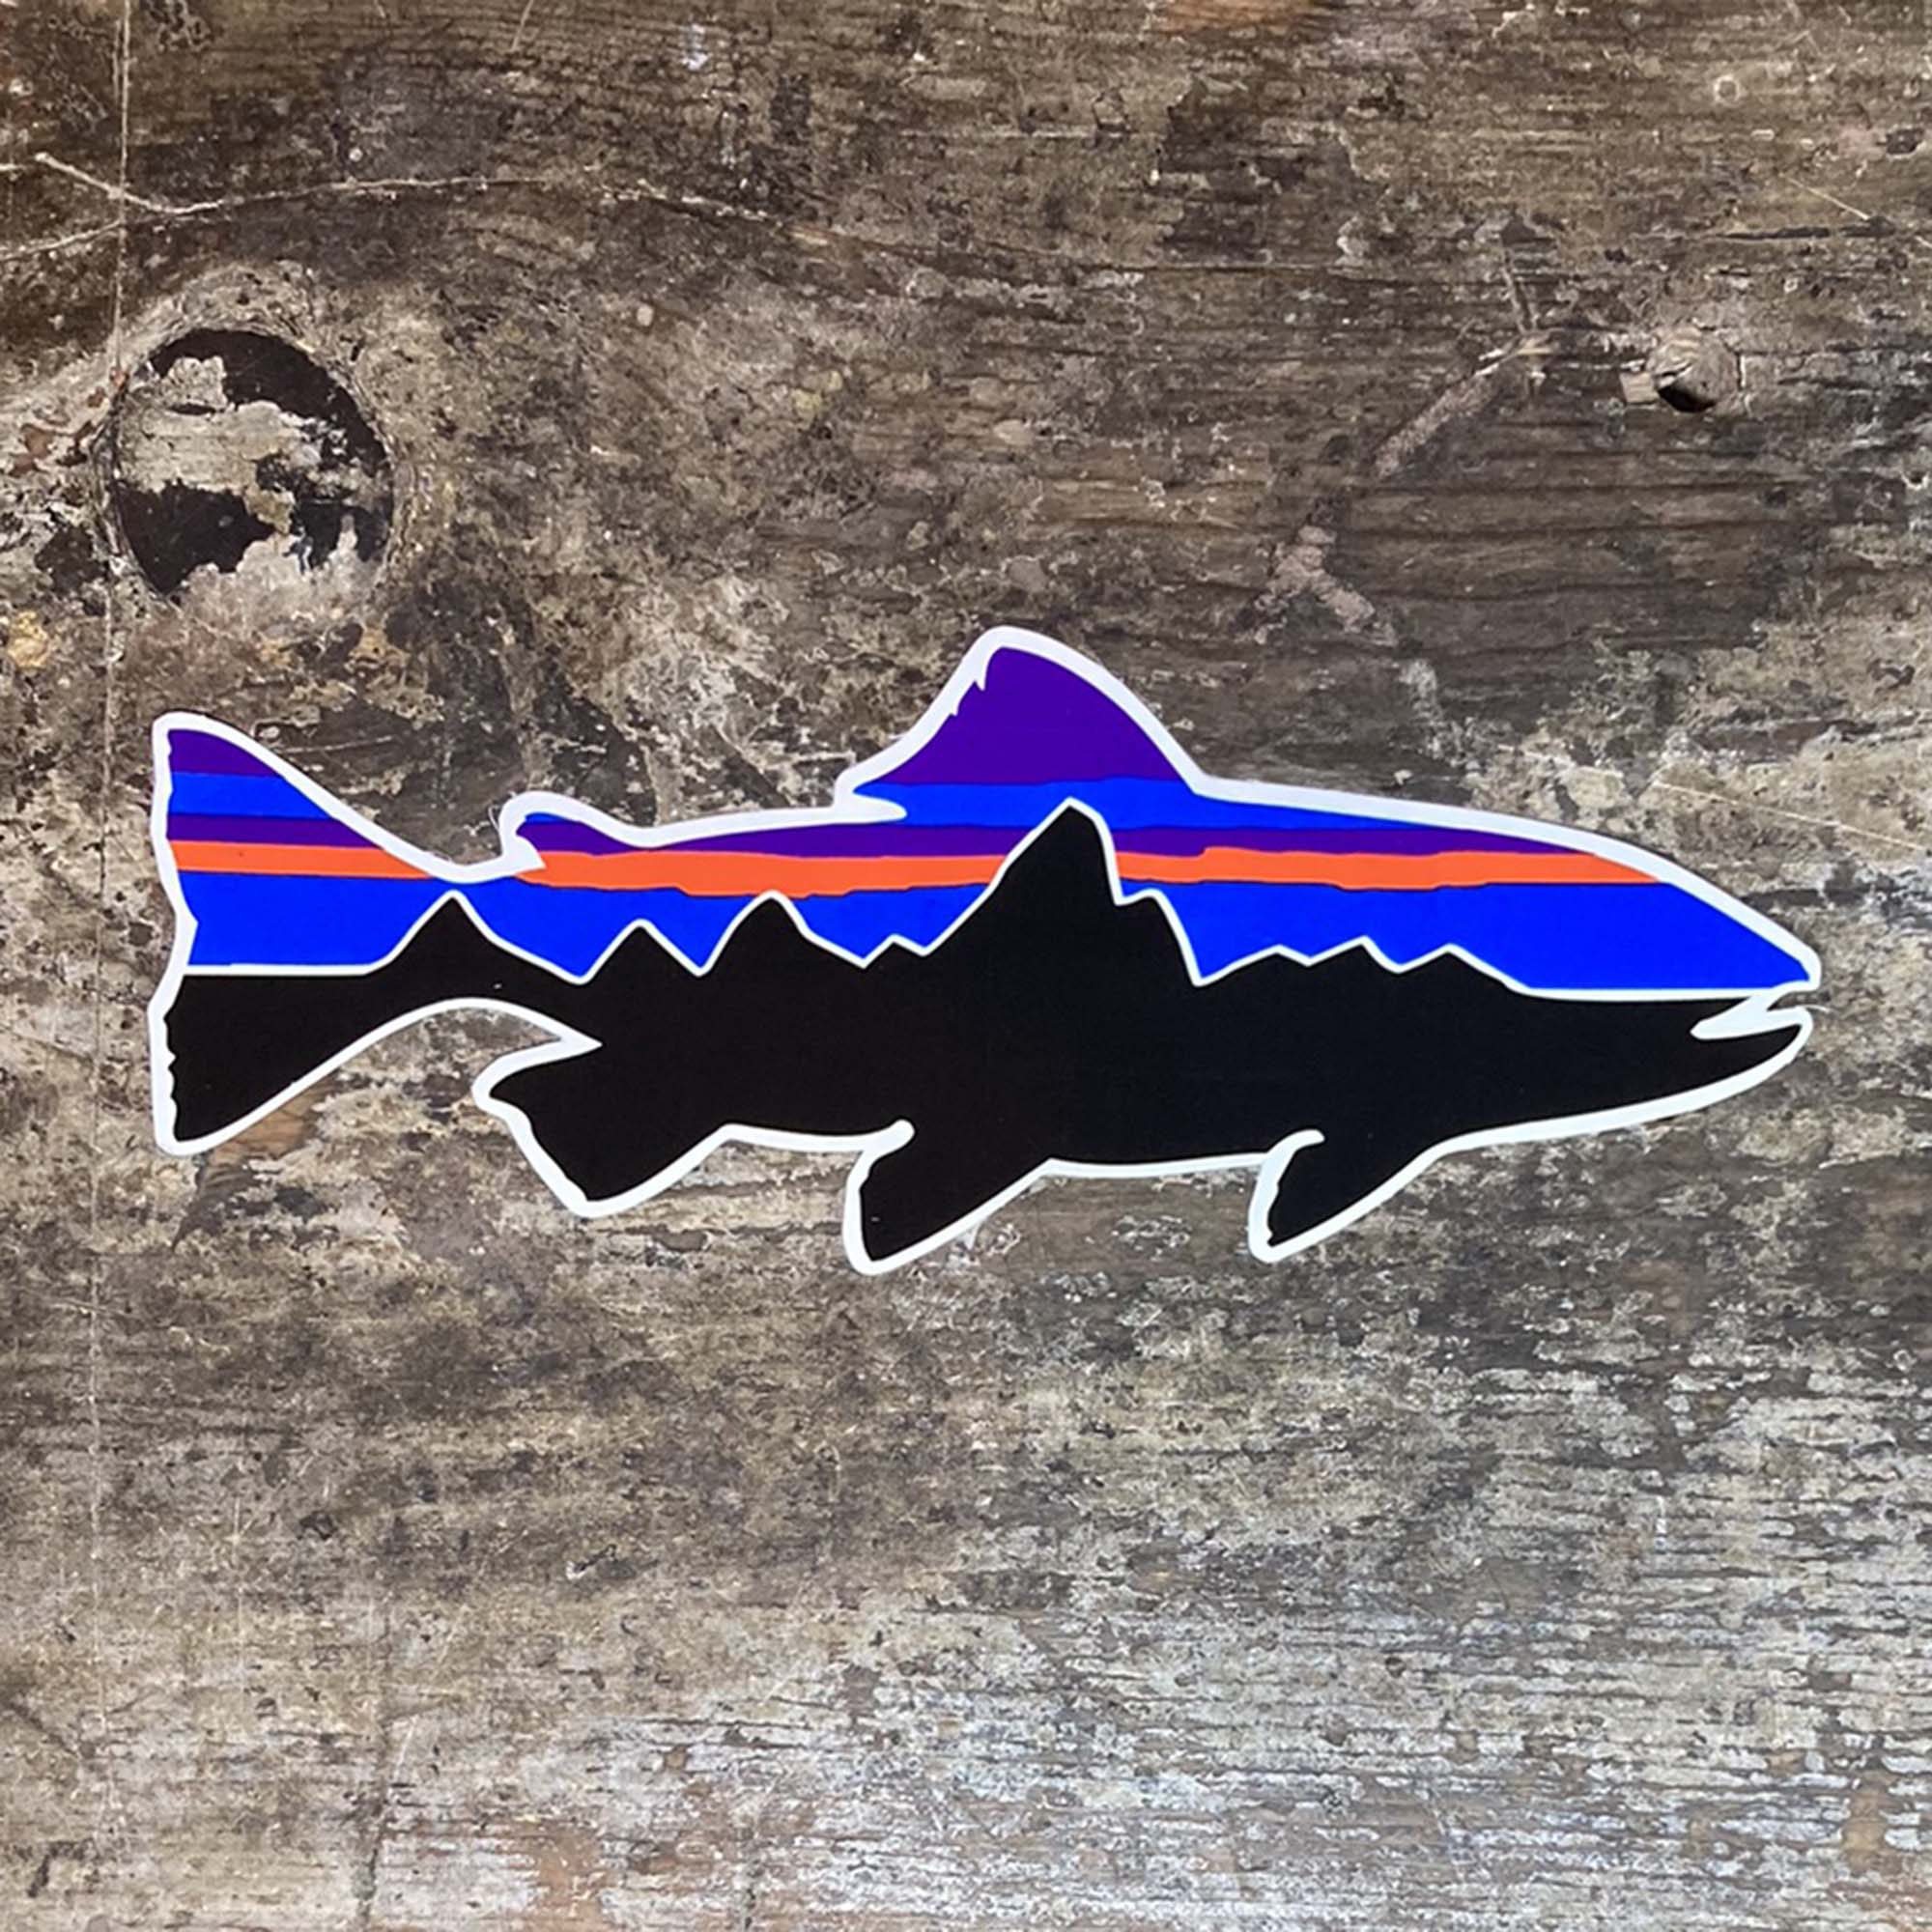 https://dragonflyanglers.com/wp-content/uploads/2022/03/patagonia-fitzroy-trout-sticker.jpg